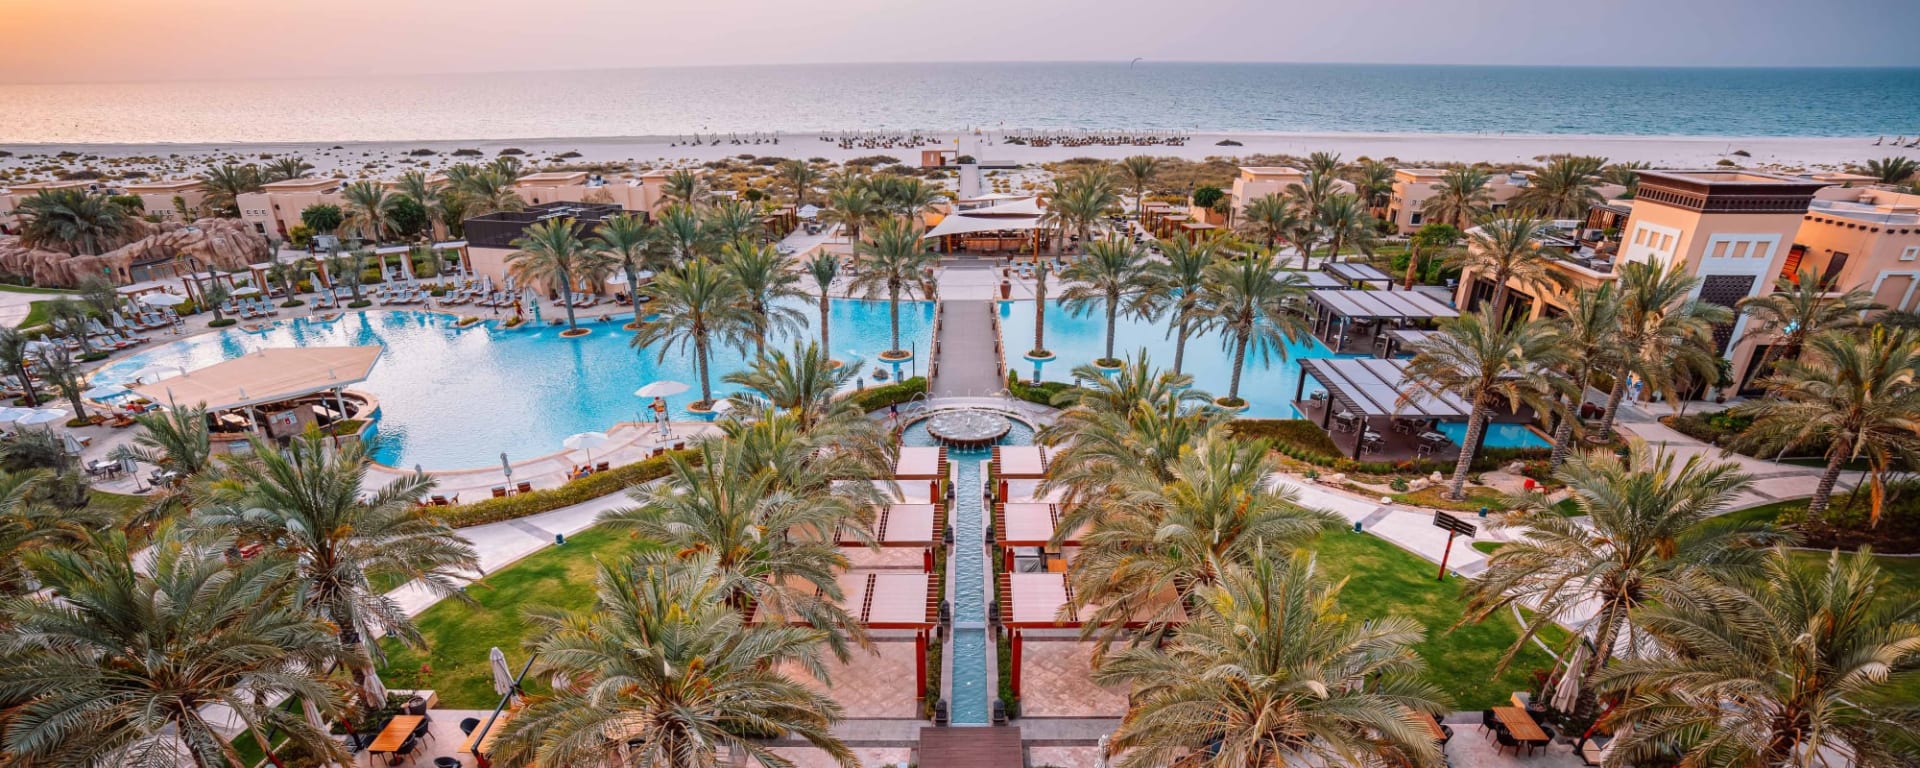 Saadiyat Rotana Resort & Villas in Abu Dhabi: Abu Dhabi Saadiyat Rotana Resort and Villas